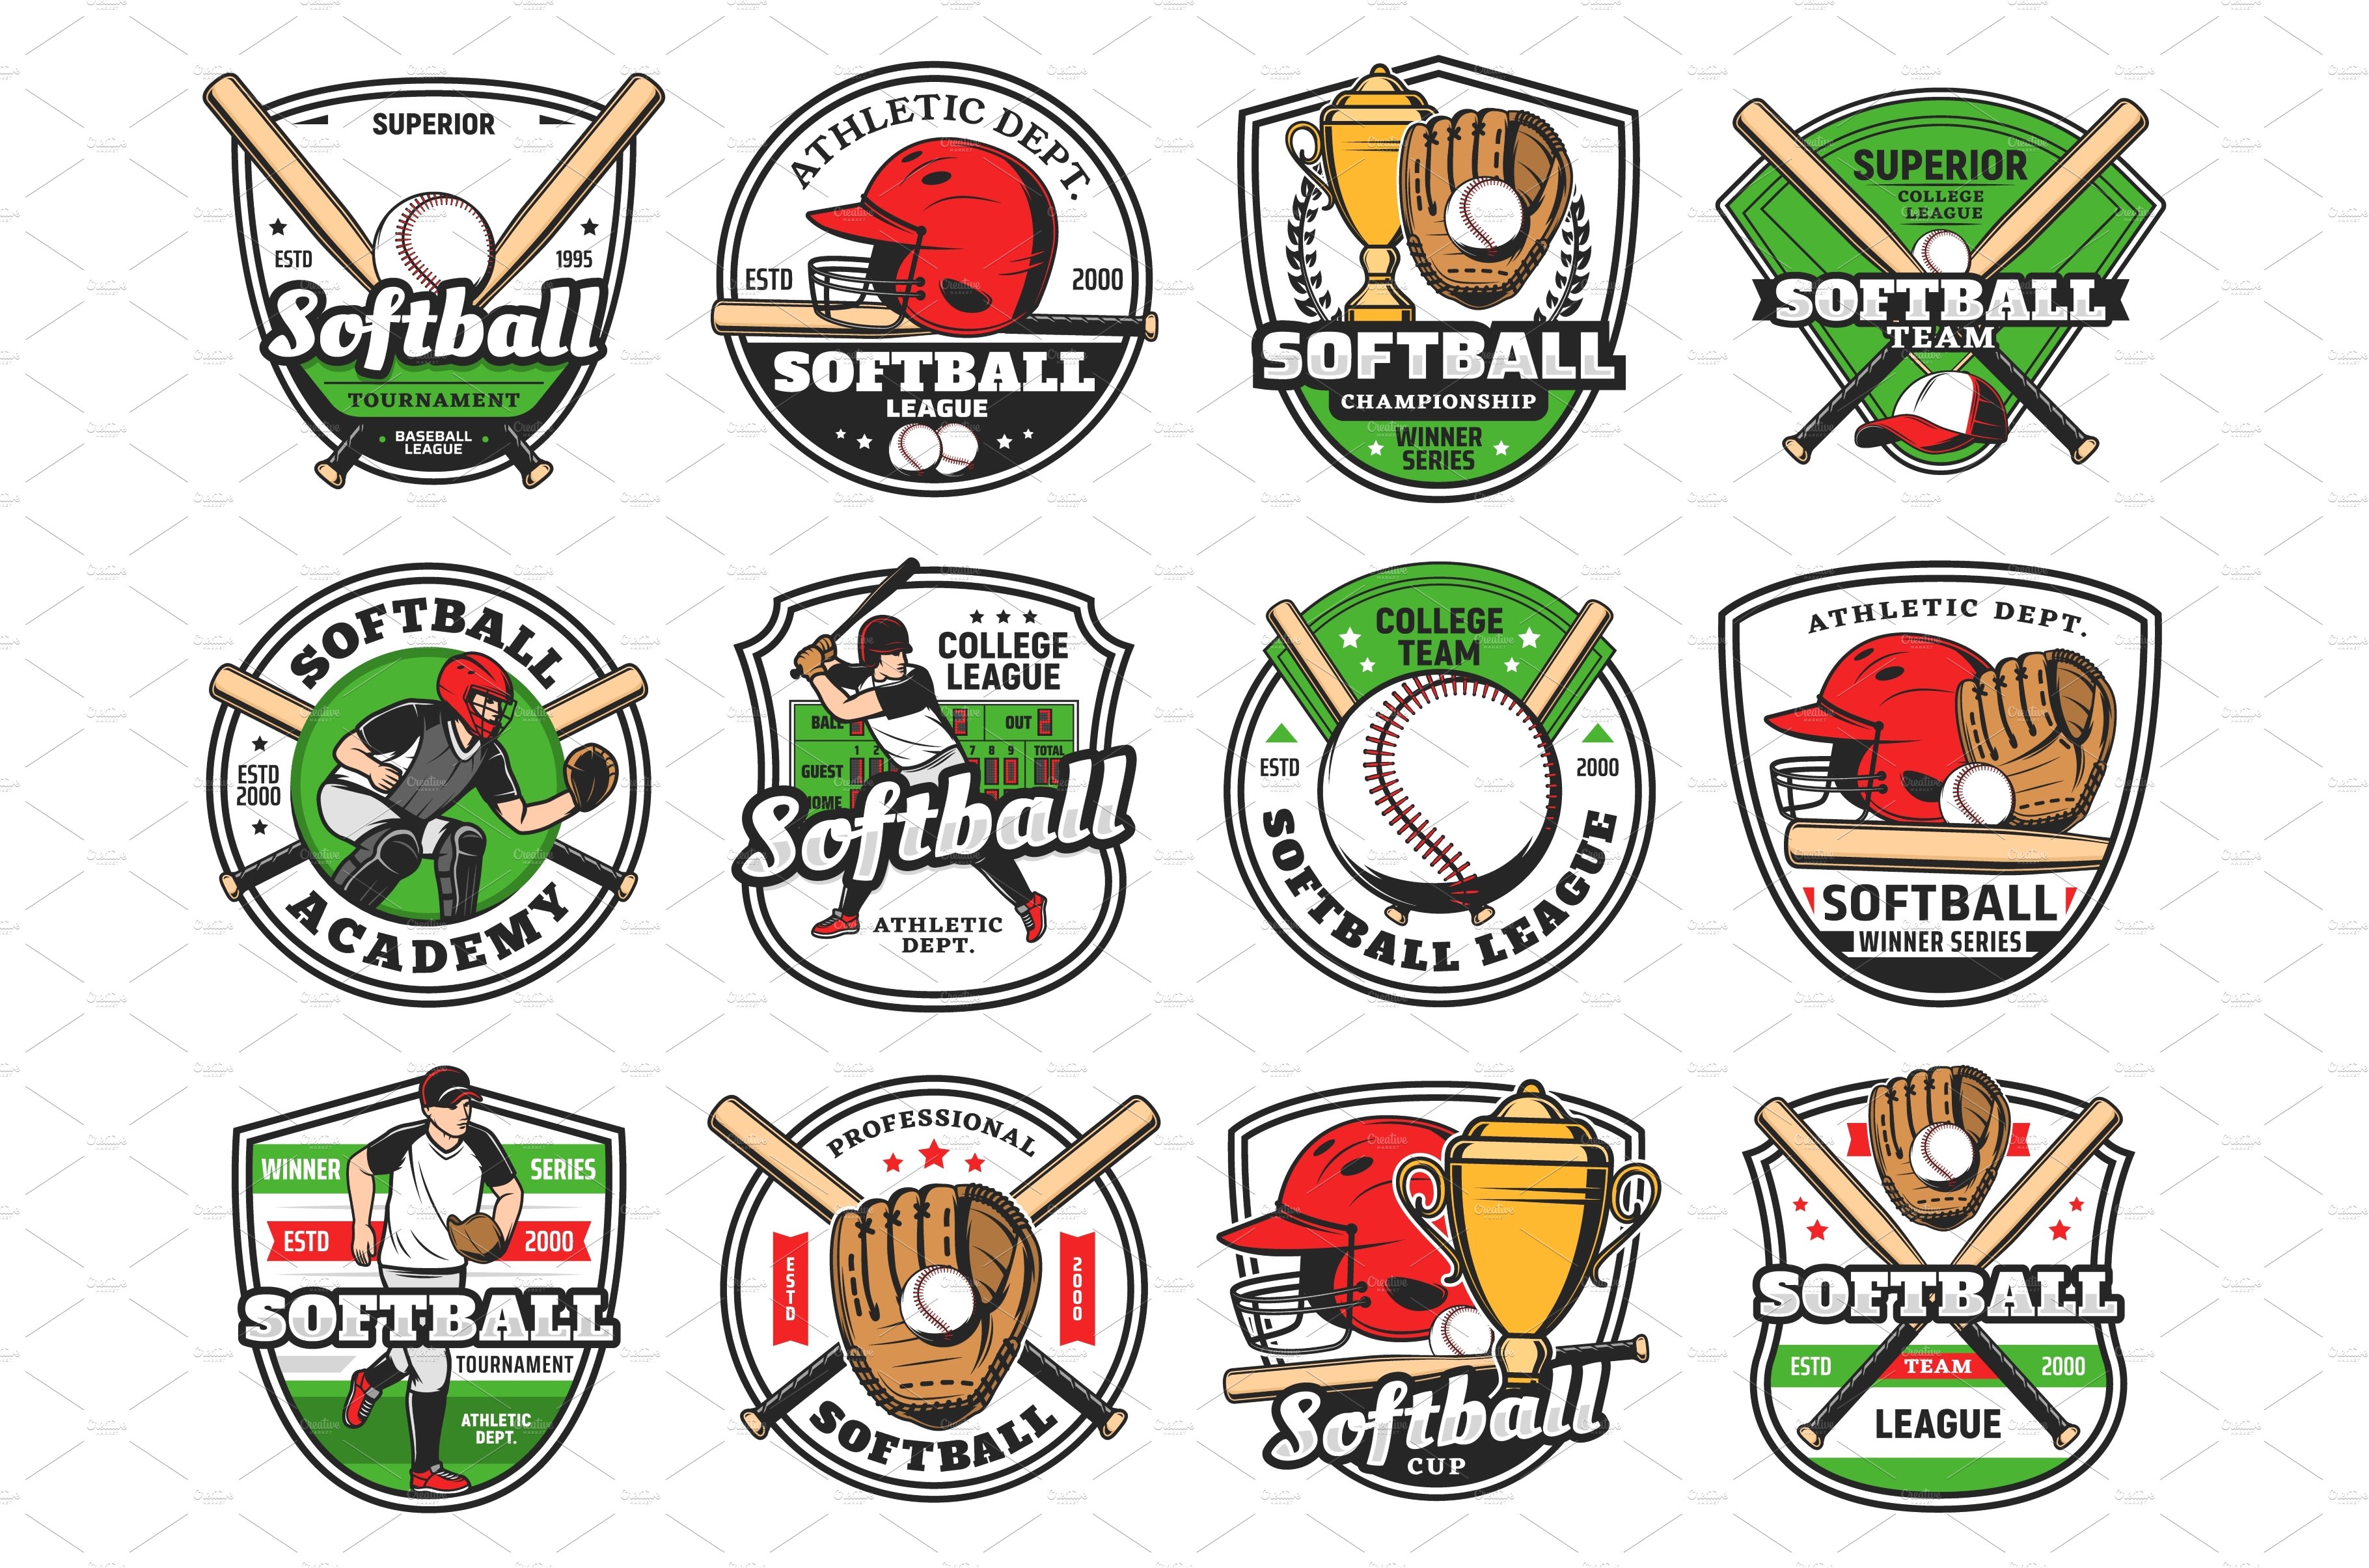 Vivid baseball badges in a vintage style.